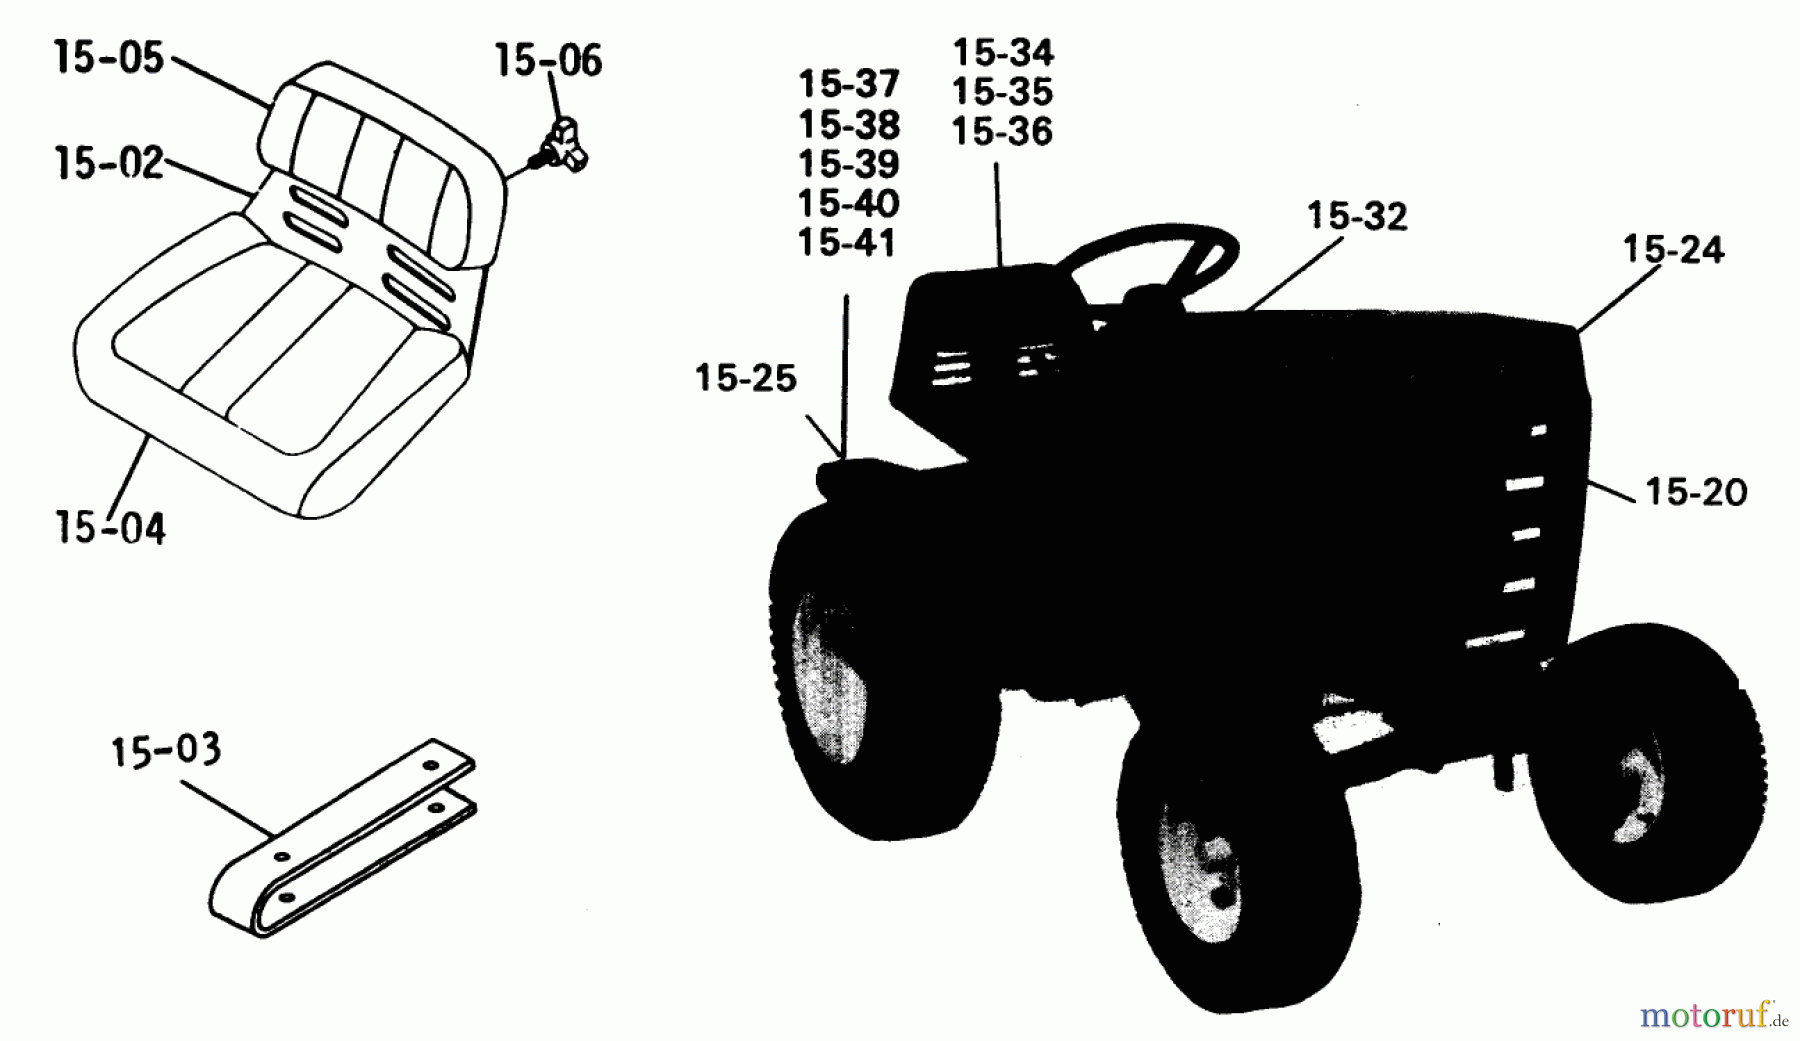  Toro Neu Mowers, Lawn & Garden Tractor Seite 1 1-0396 (C-120) - Toro C-120 8-Speed Tractor, 1975 15.000 SEATS, DECALS MISC. TRIM (FIG. 15)